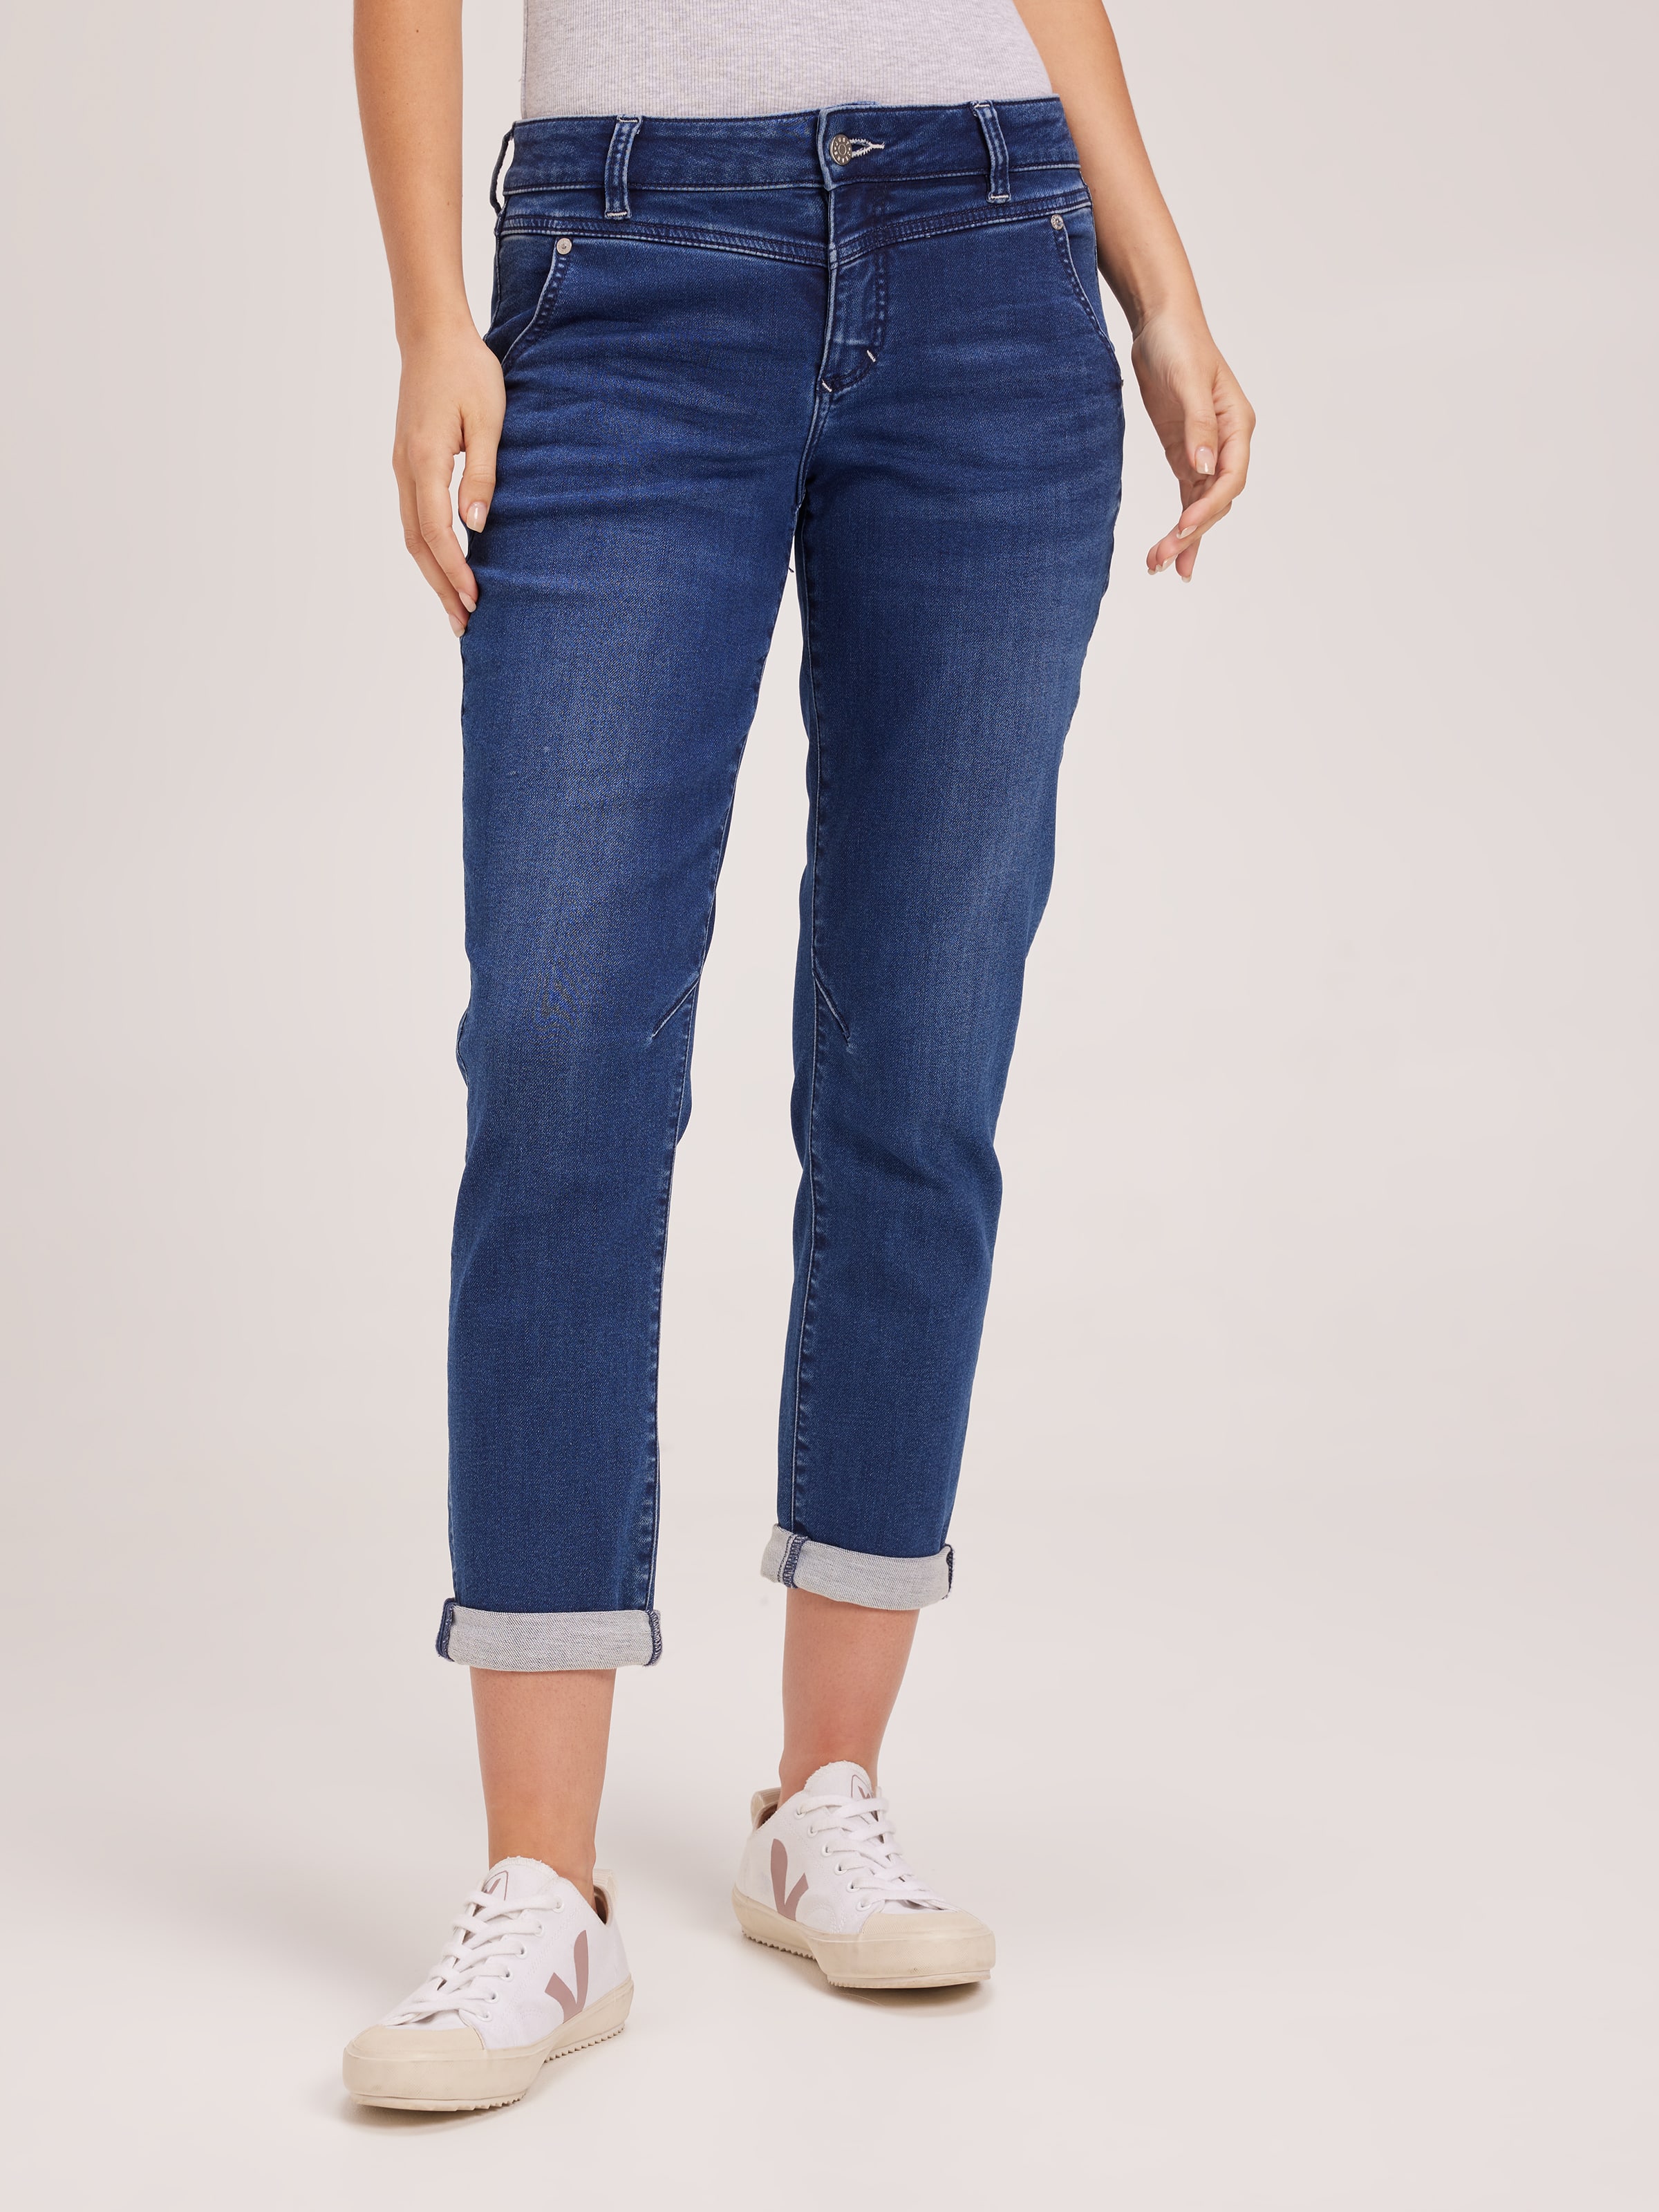 LEE Jeans Women's Dream Skinny Leg Comfort Waist Jeans 14M